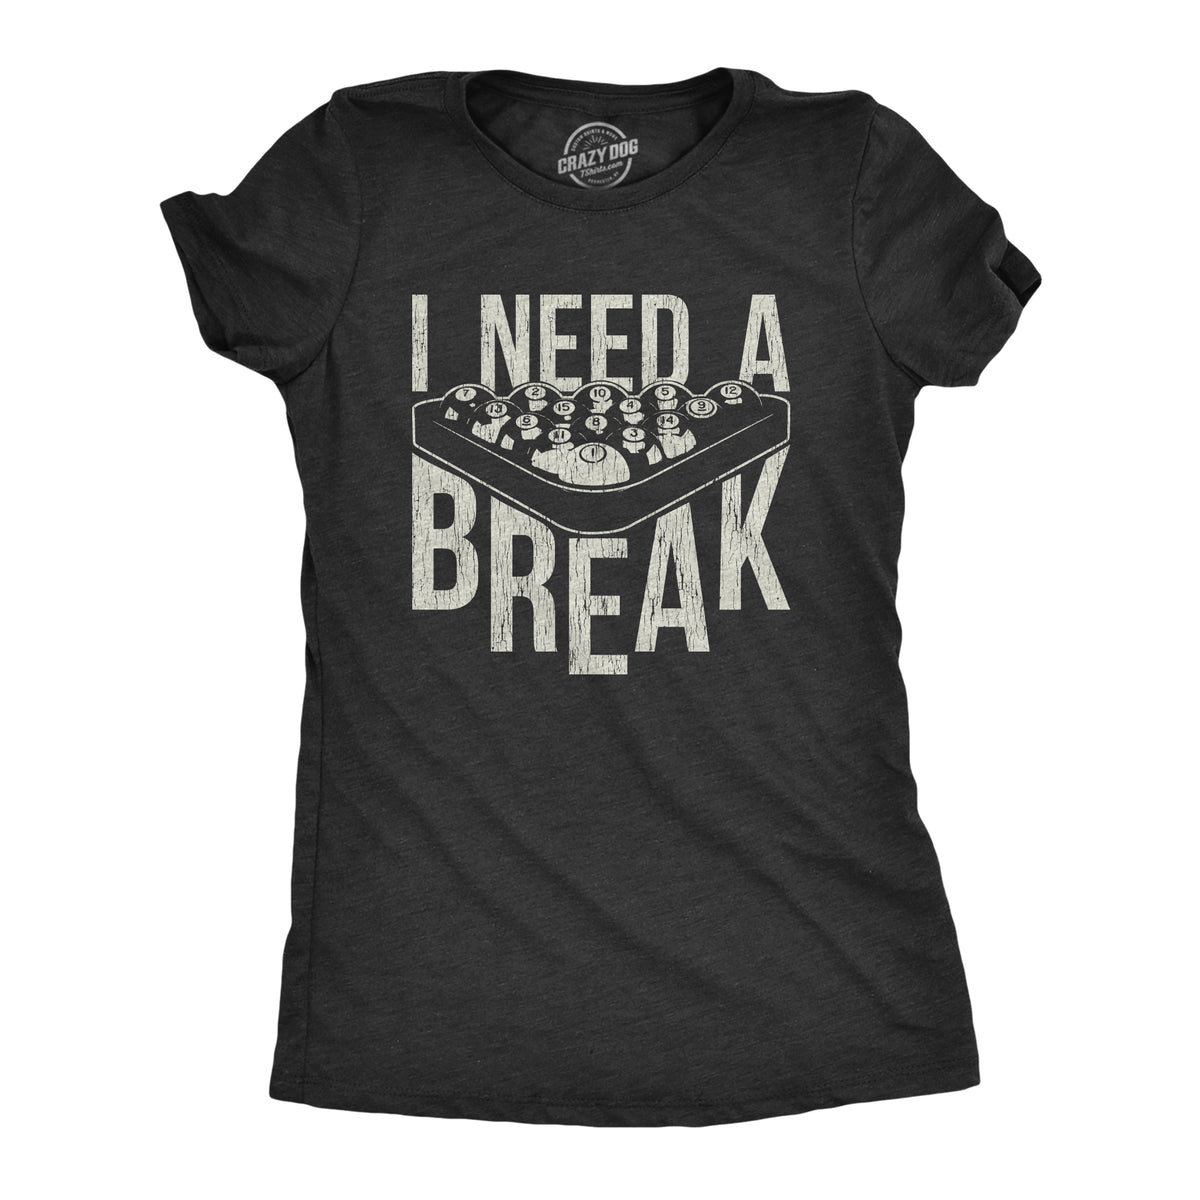 Funny Heather Black I Need A Break Womens T Shirt Nerdy Nerdy Sports Tee